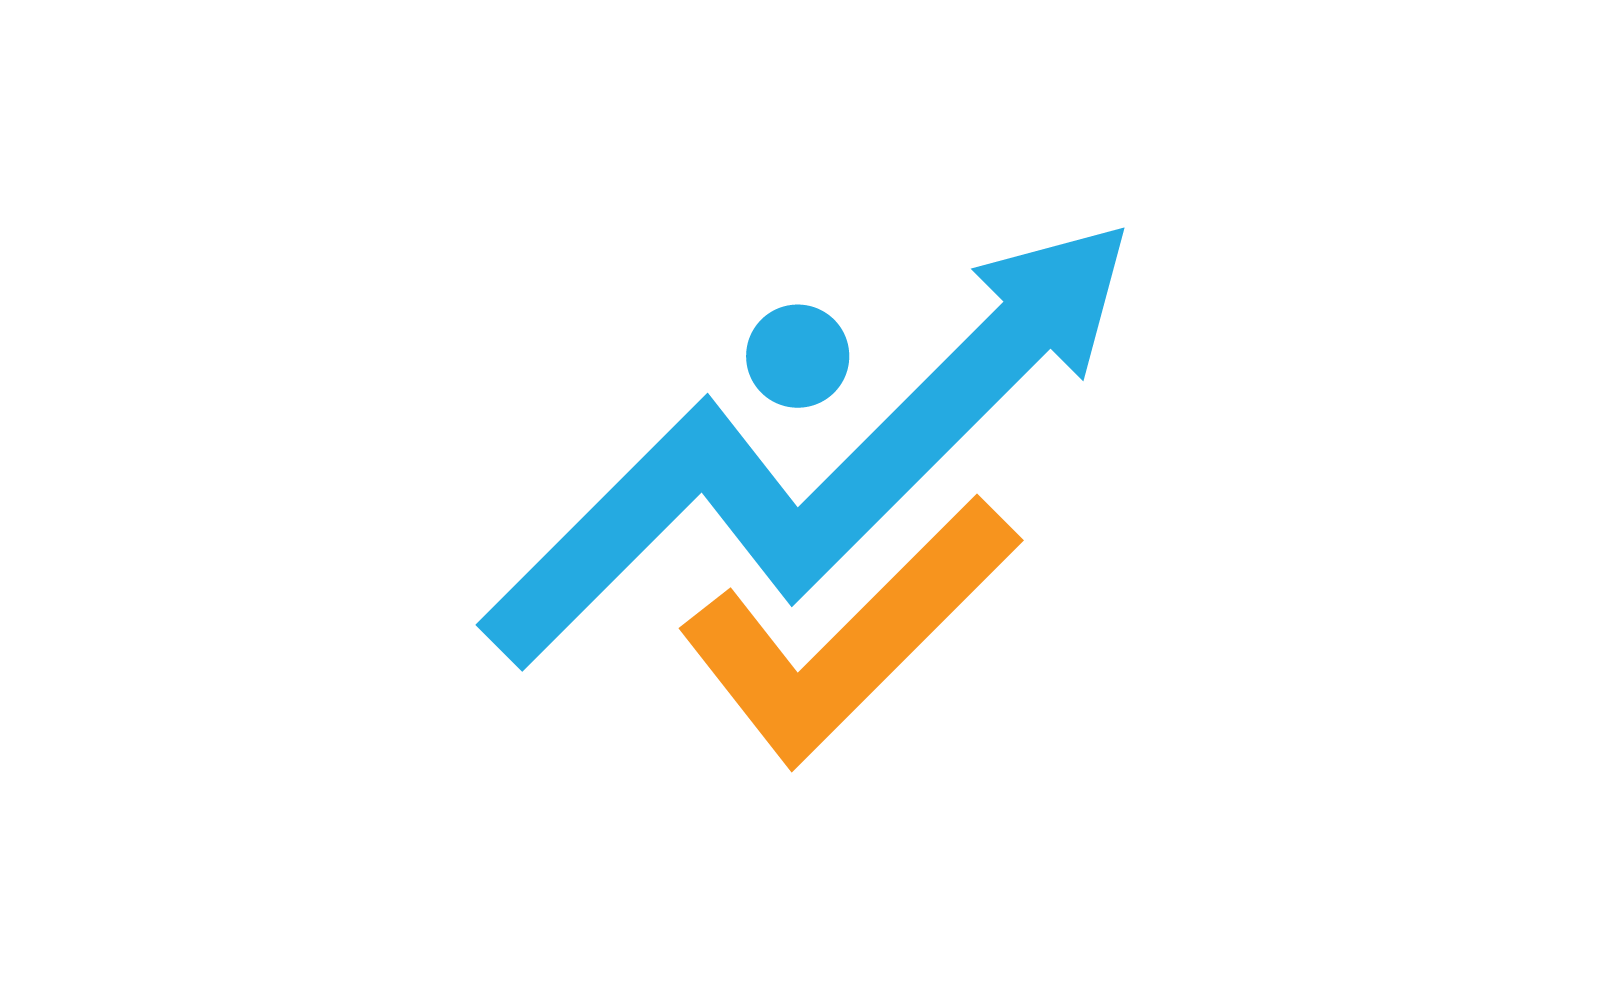 Business finance arrow logo icon vector template Logo Template